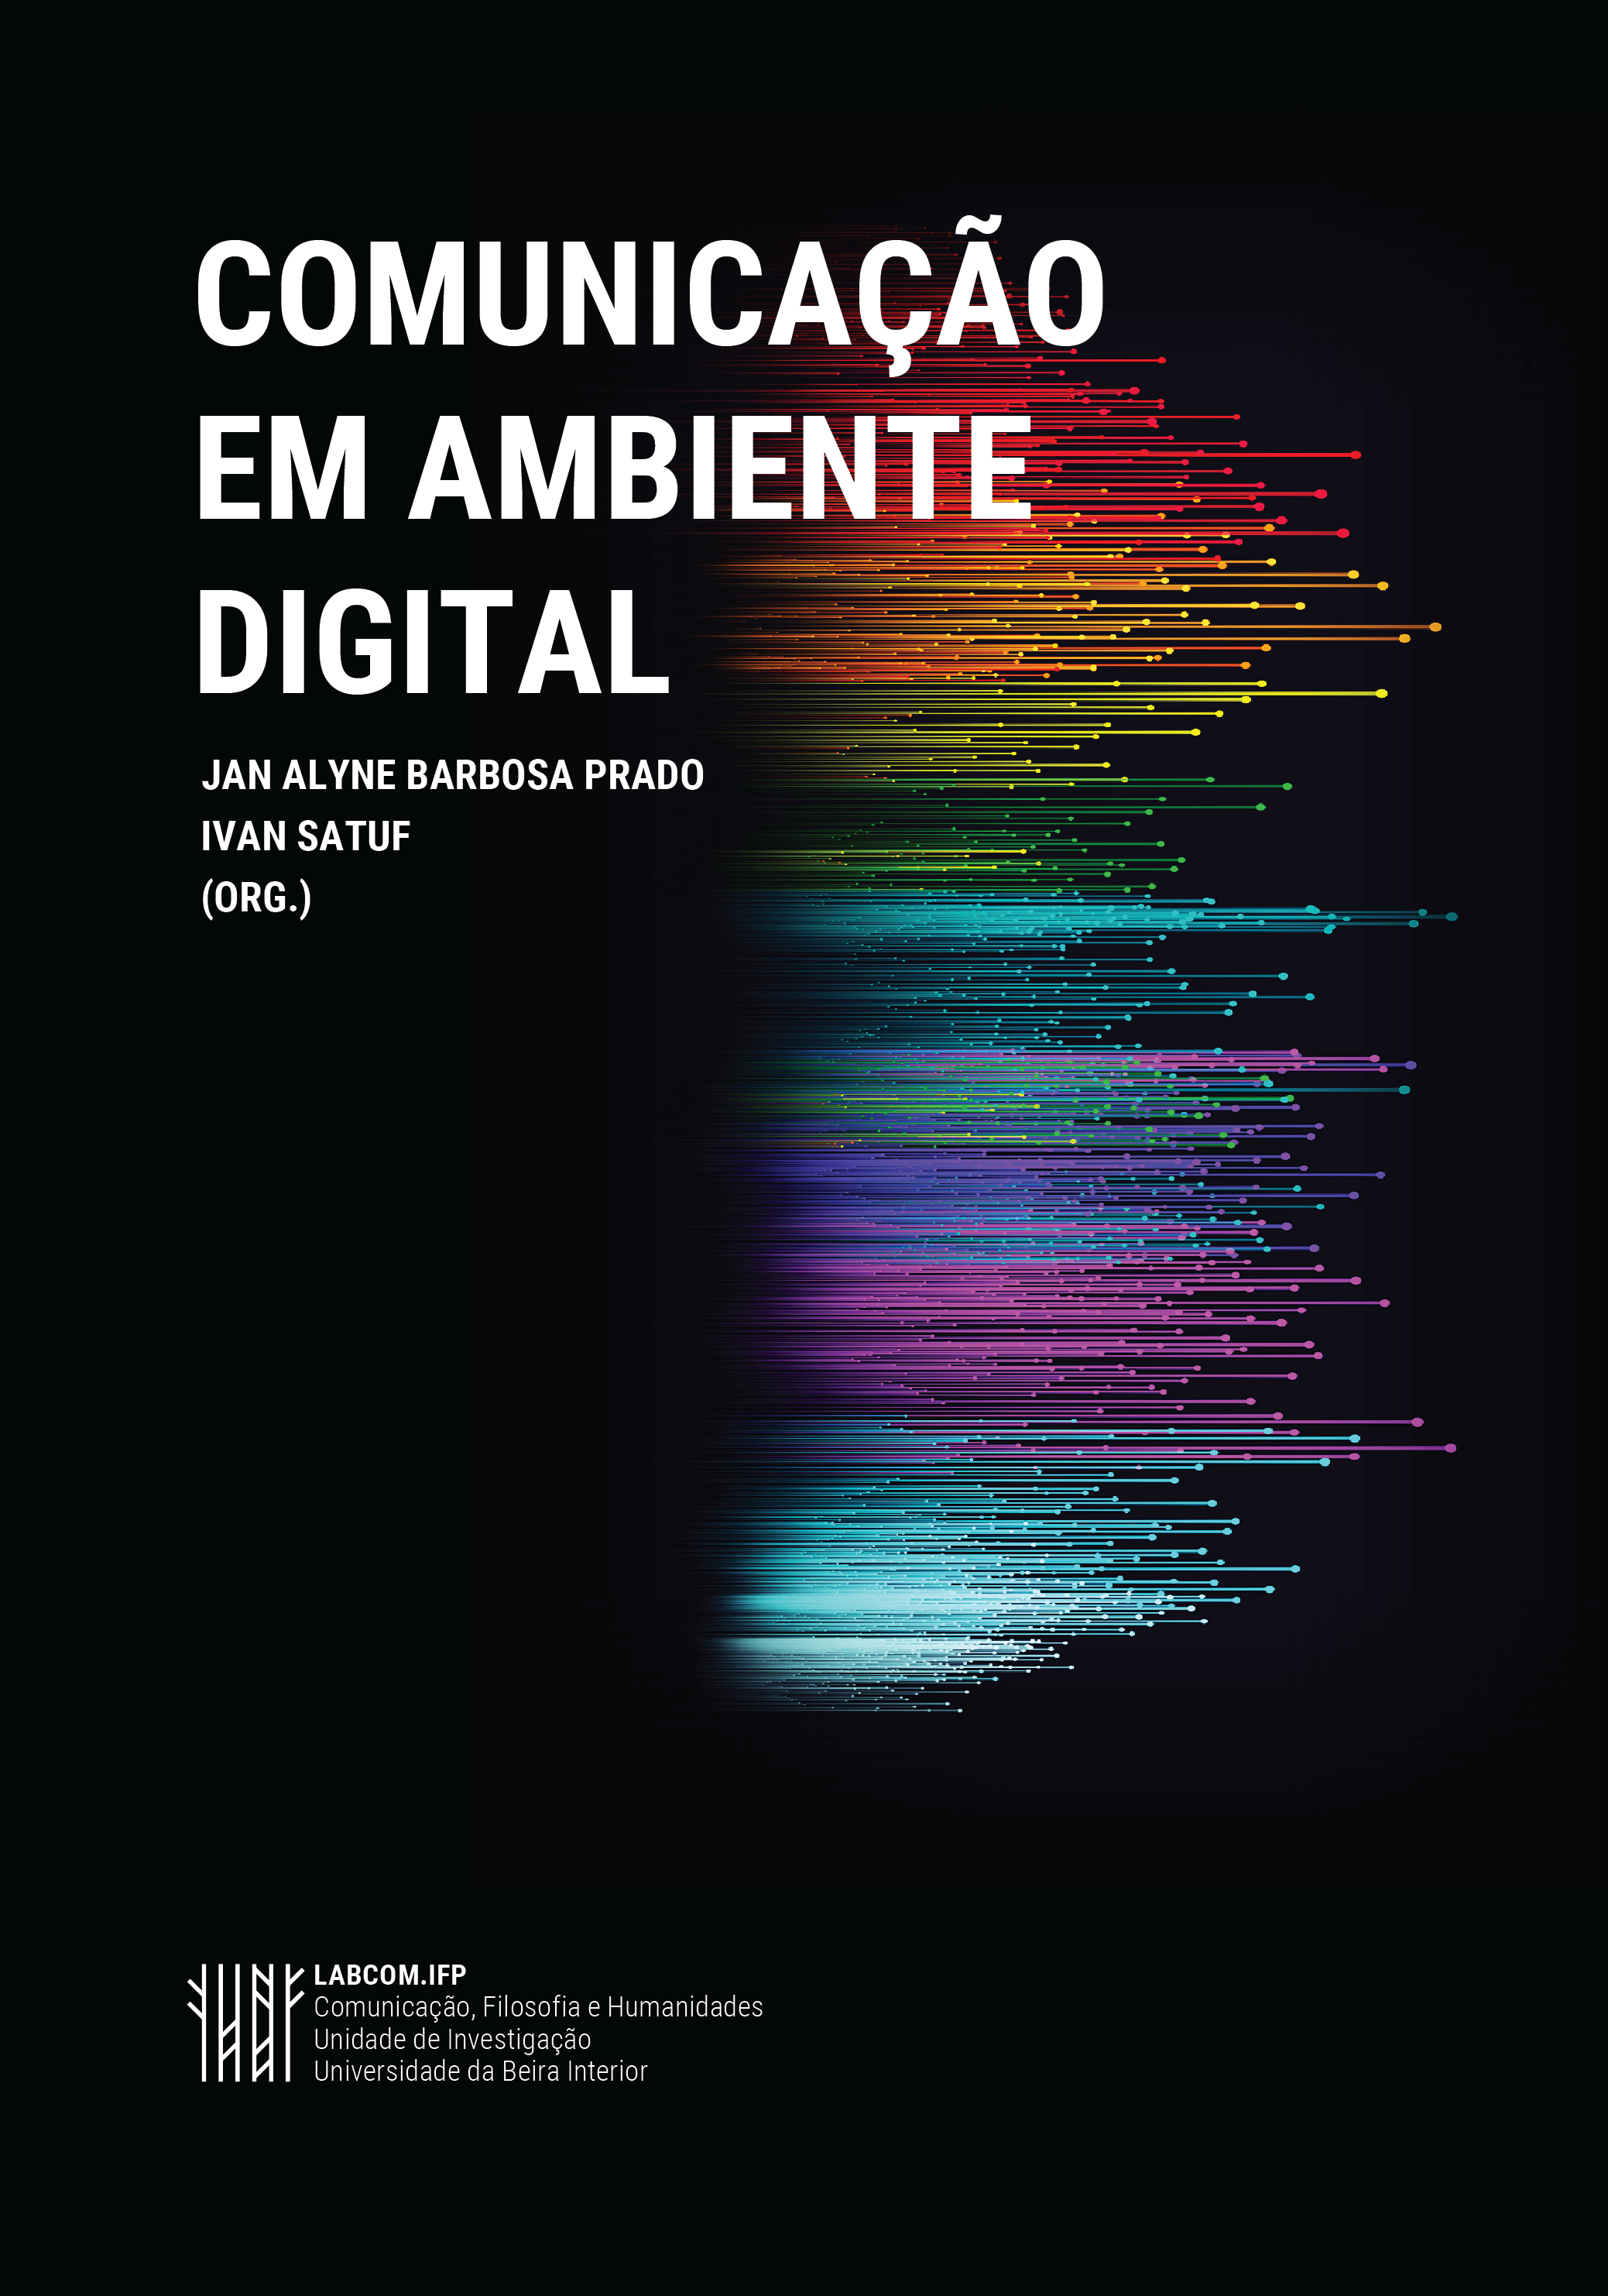 Capa: Jan Alyne Barbosa Prado & Ivan Satuf (2019) Comunicação em Ambiente Digital. Communication  +  Philosophy  +  Humanities. .